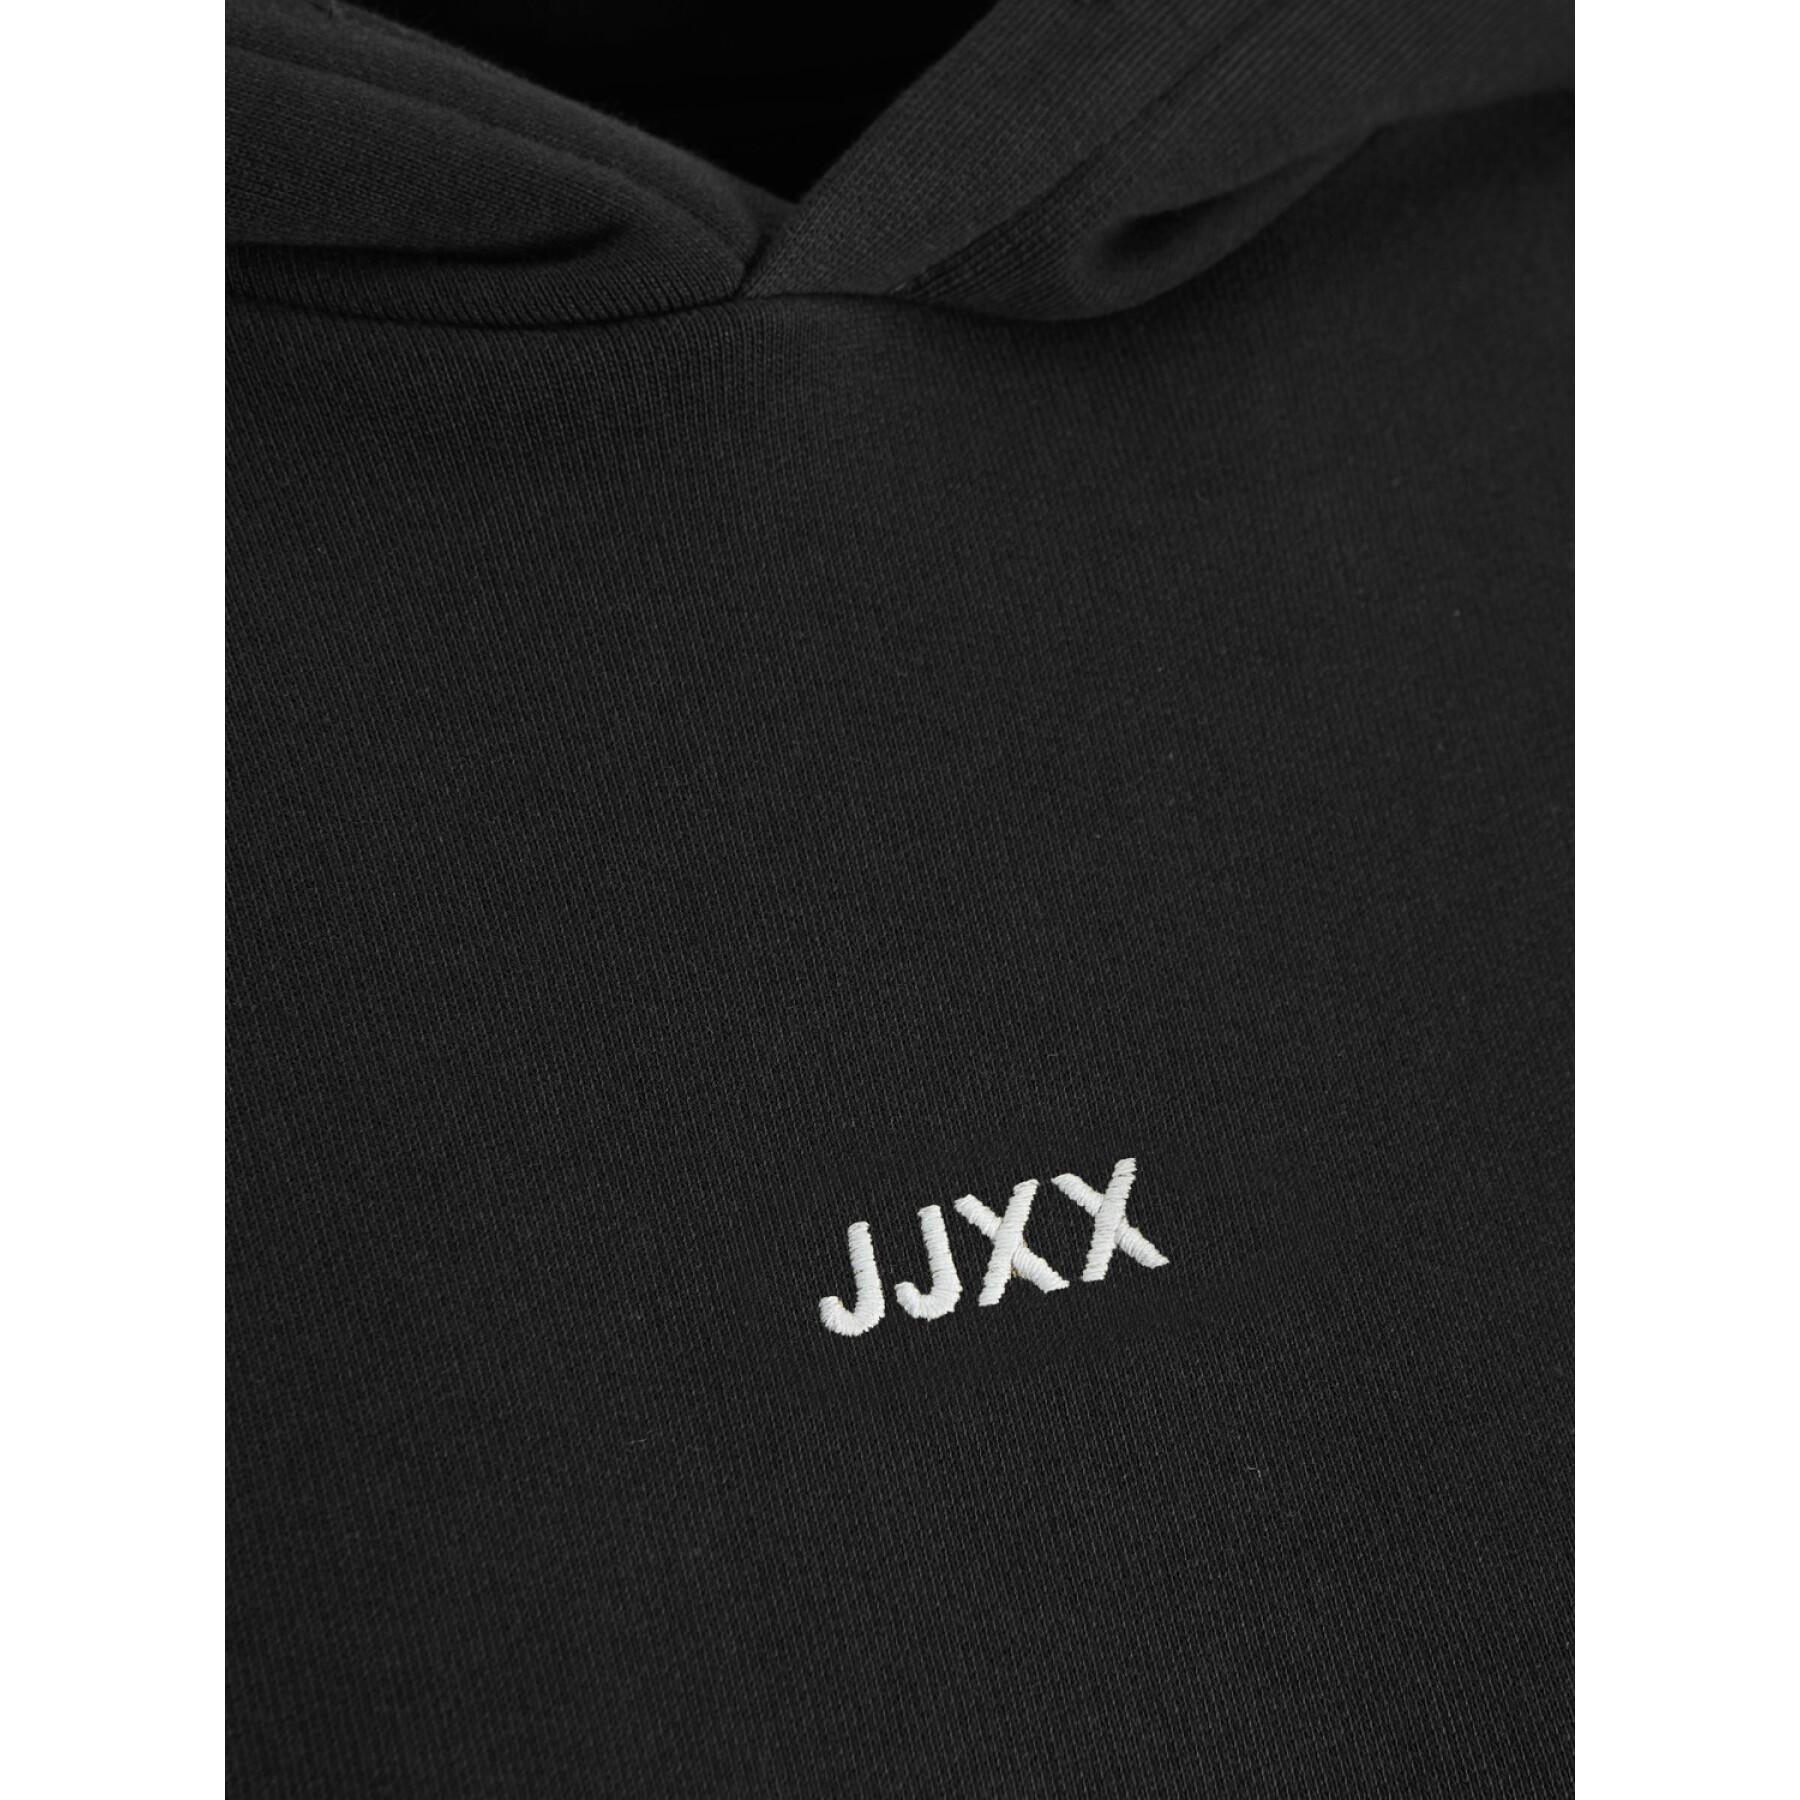 Sweatshirt à capuche large femme JJXX cleo